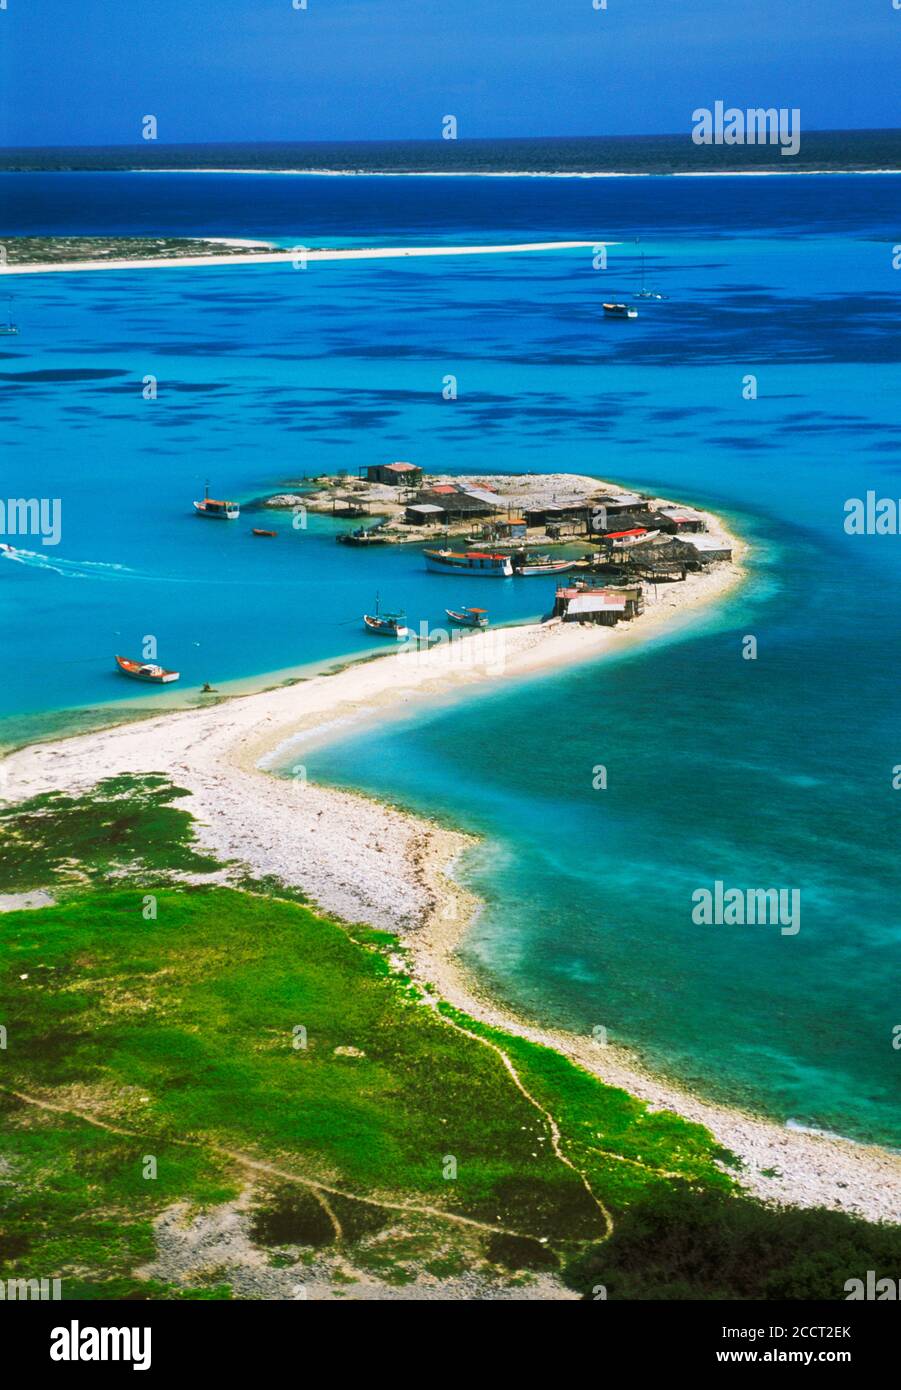 Aerial view of  Tortuga Islands in Caribbean Ocean off Venezuela coast Stock Photo